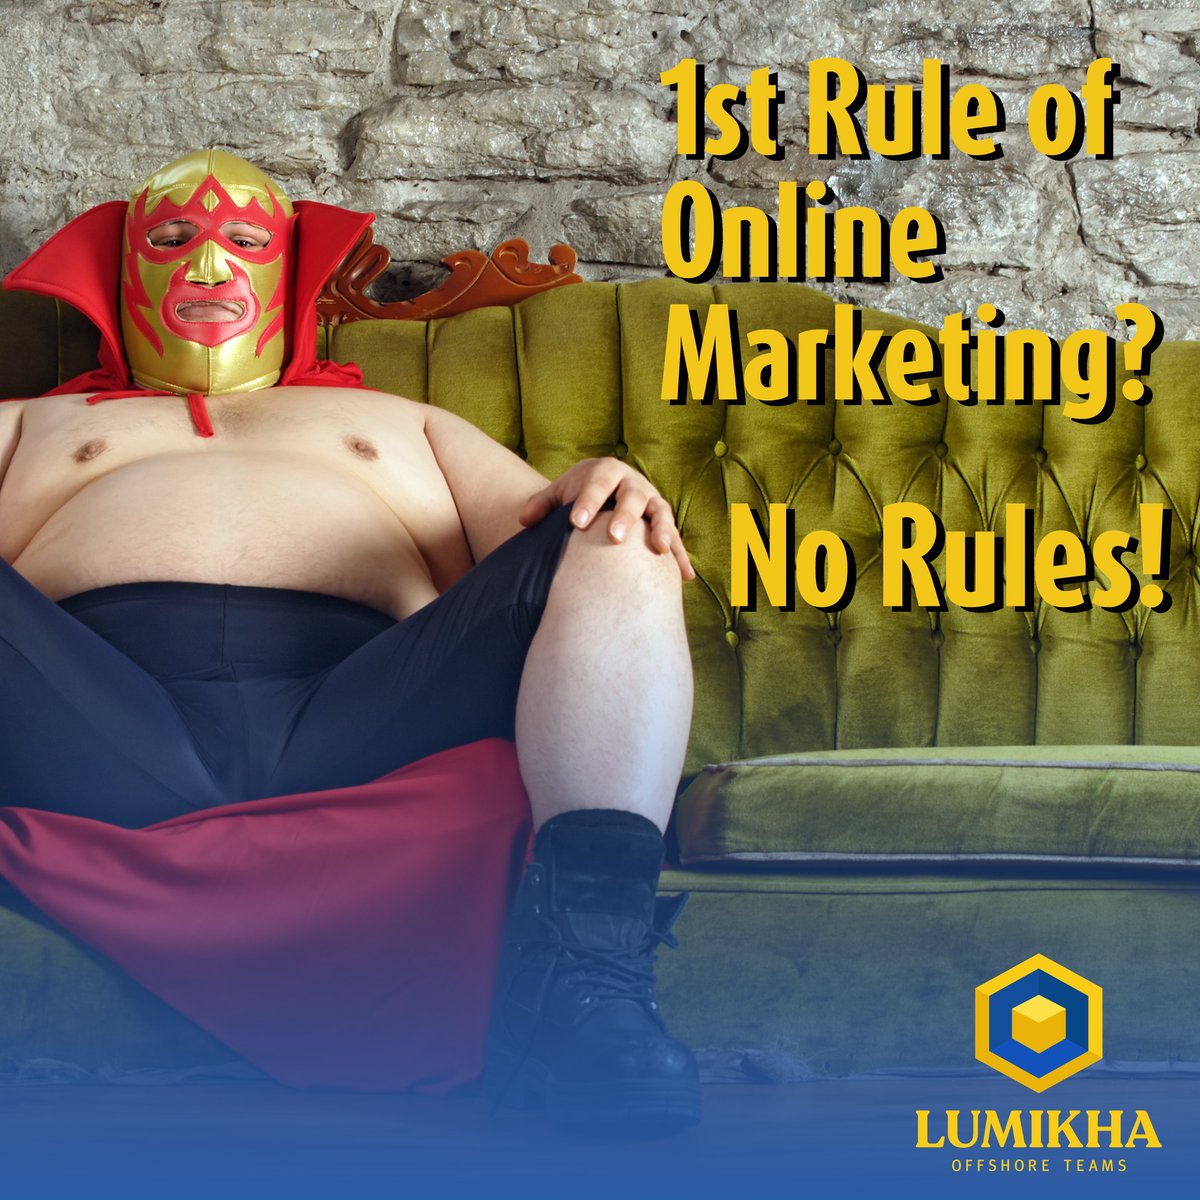 We're the online marketing agency you want. Brand launch: $206.00 lumikha.co
#digitalagency, #lumikhateams, #onlinemarketing, #bestmarketingagency